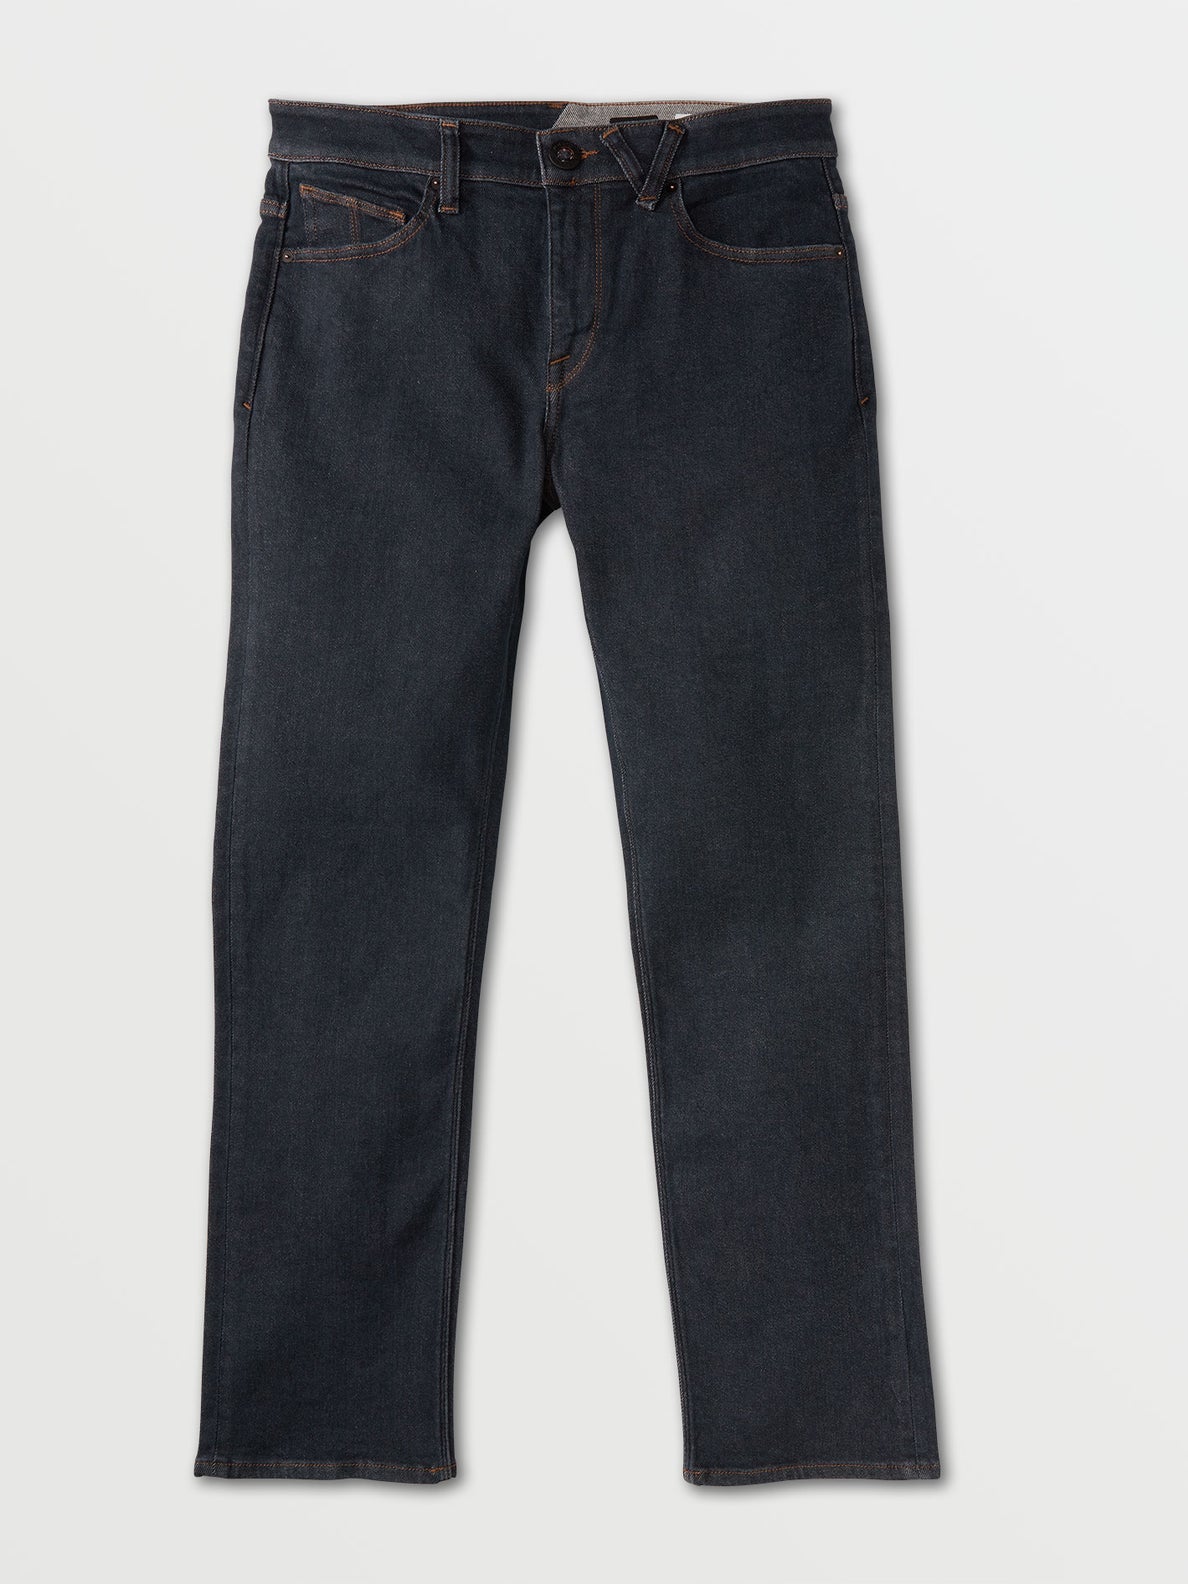 Volcom Solver Modern Fit Jeans - Grey Indigo Rinse